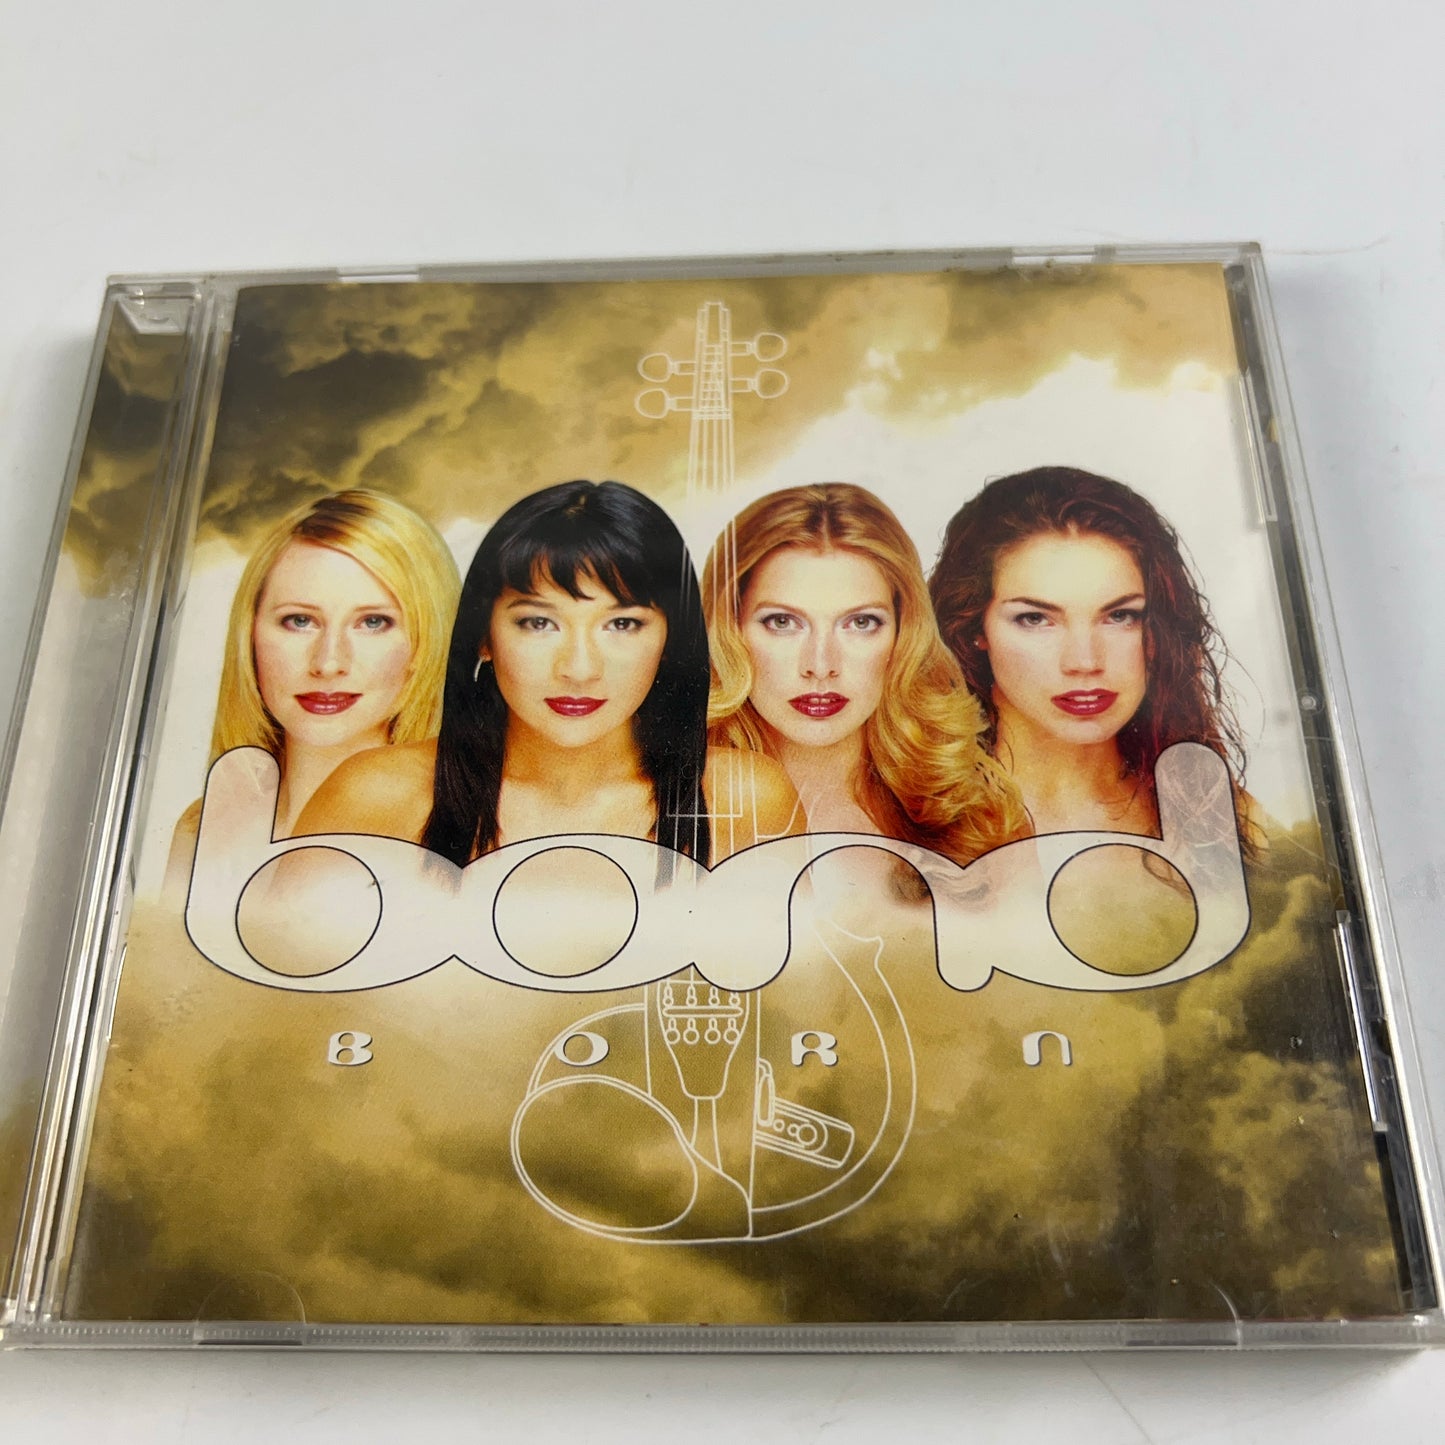 Born by Bond (String Quartet) (CD, 2000, Decca)